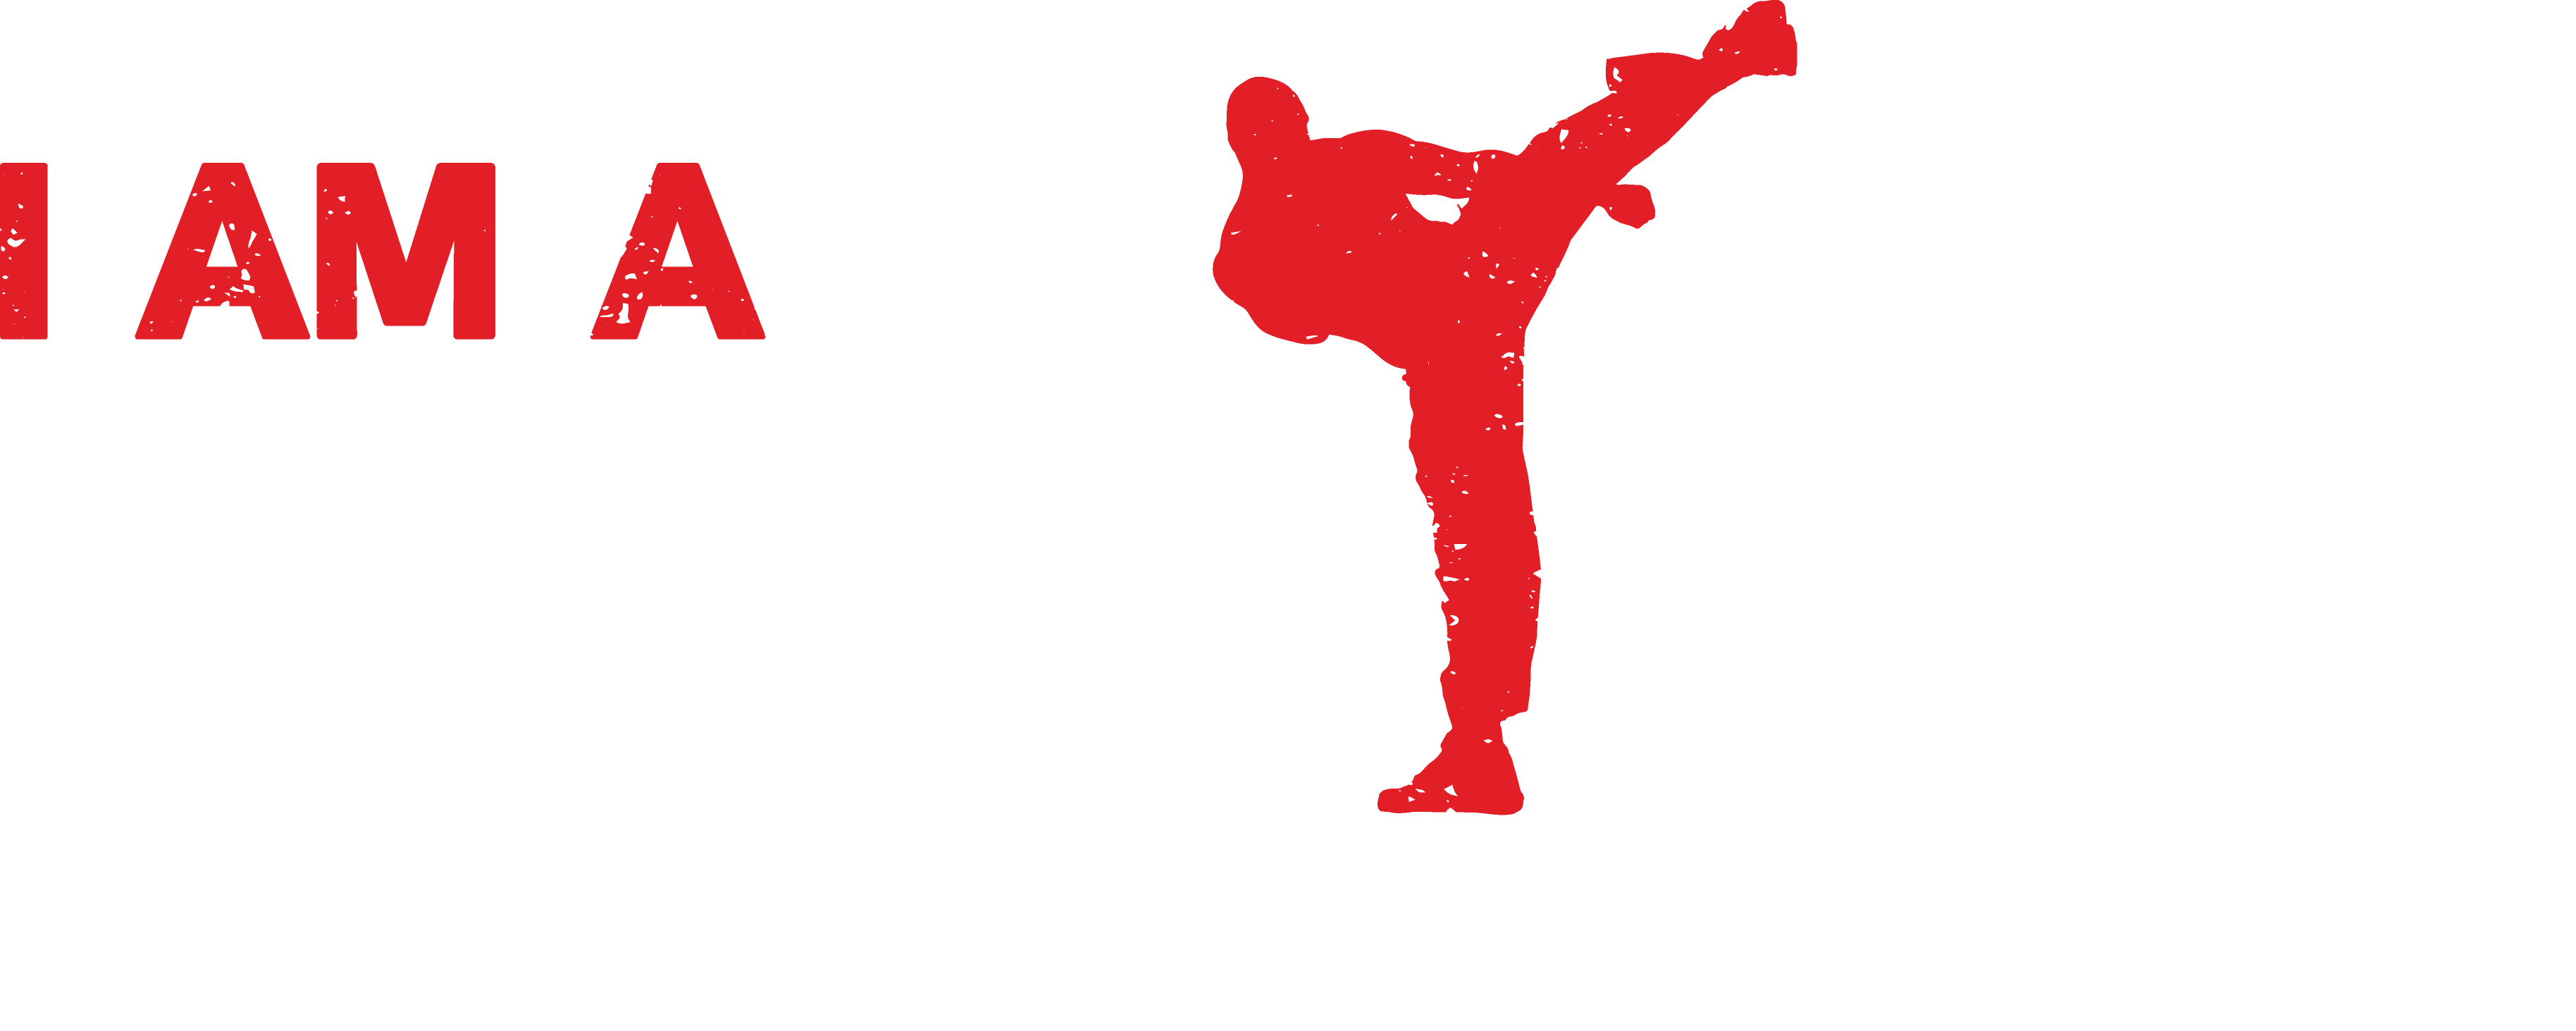 I AM A FIGHTER | Sam Greco